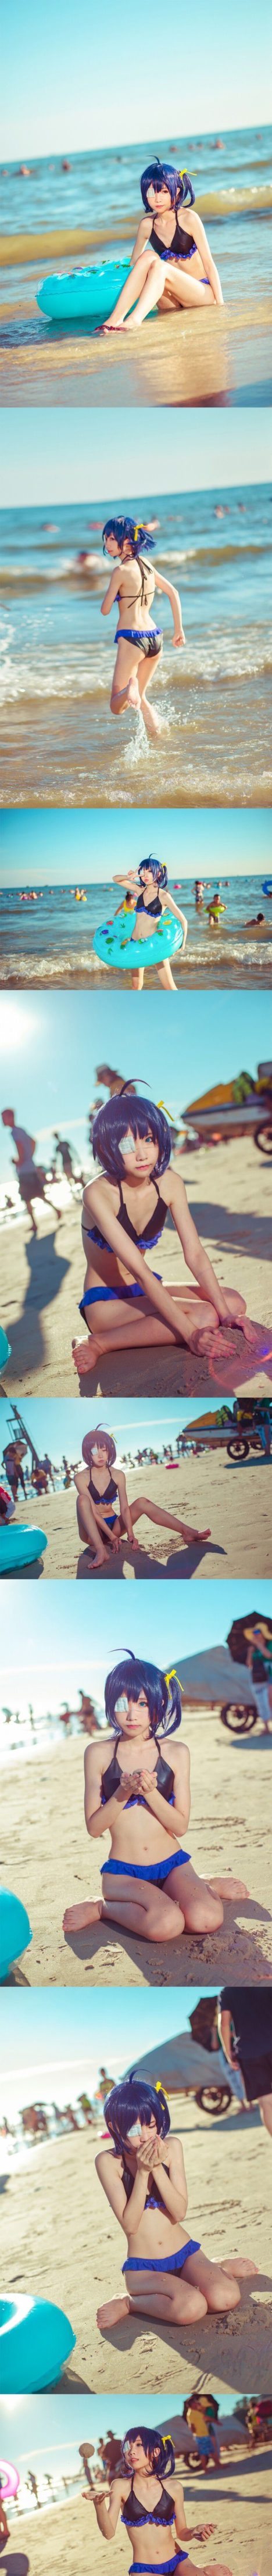 TakanashiRikka-Beach-Bikini-Cosplay-4